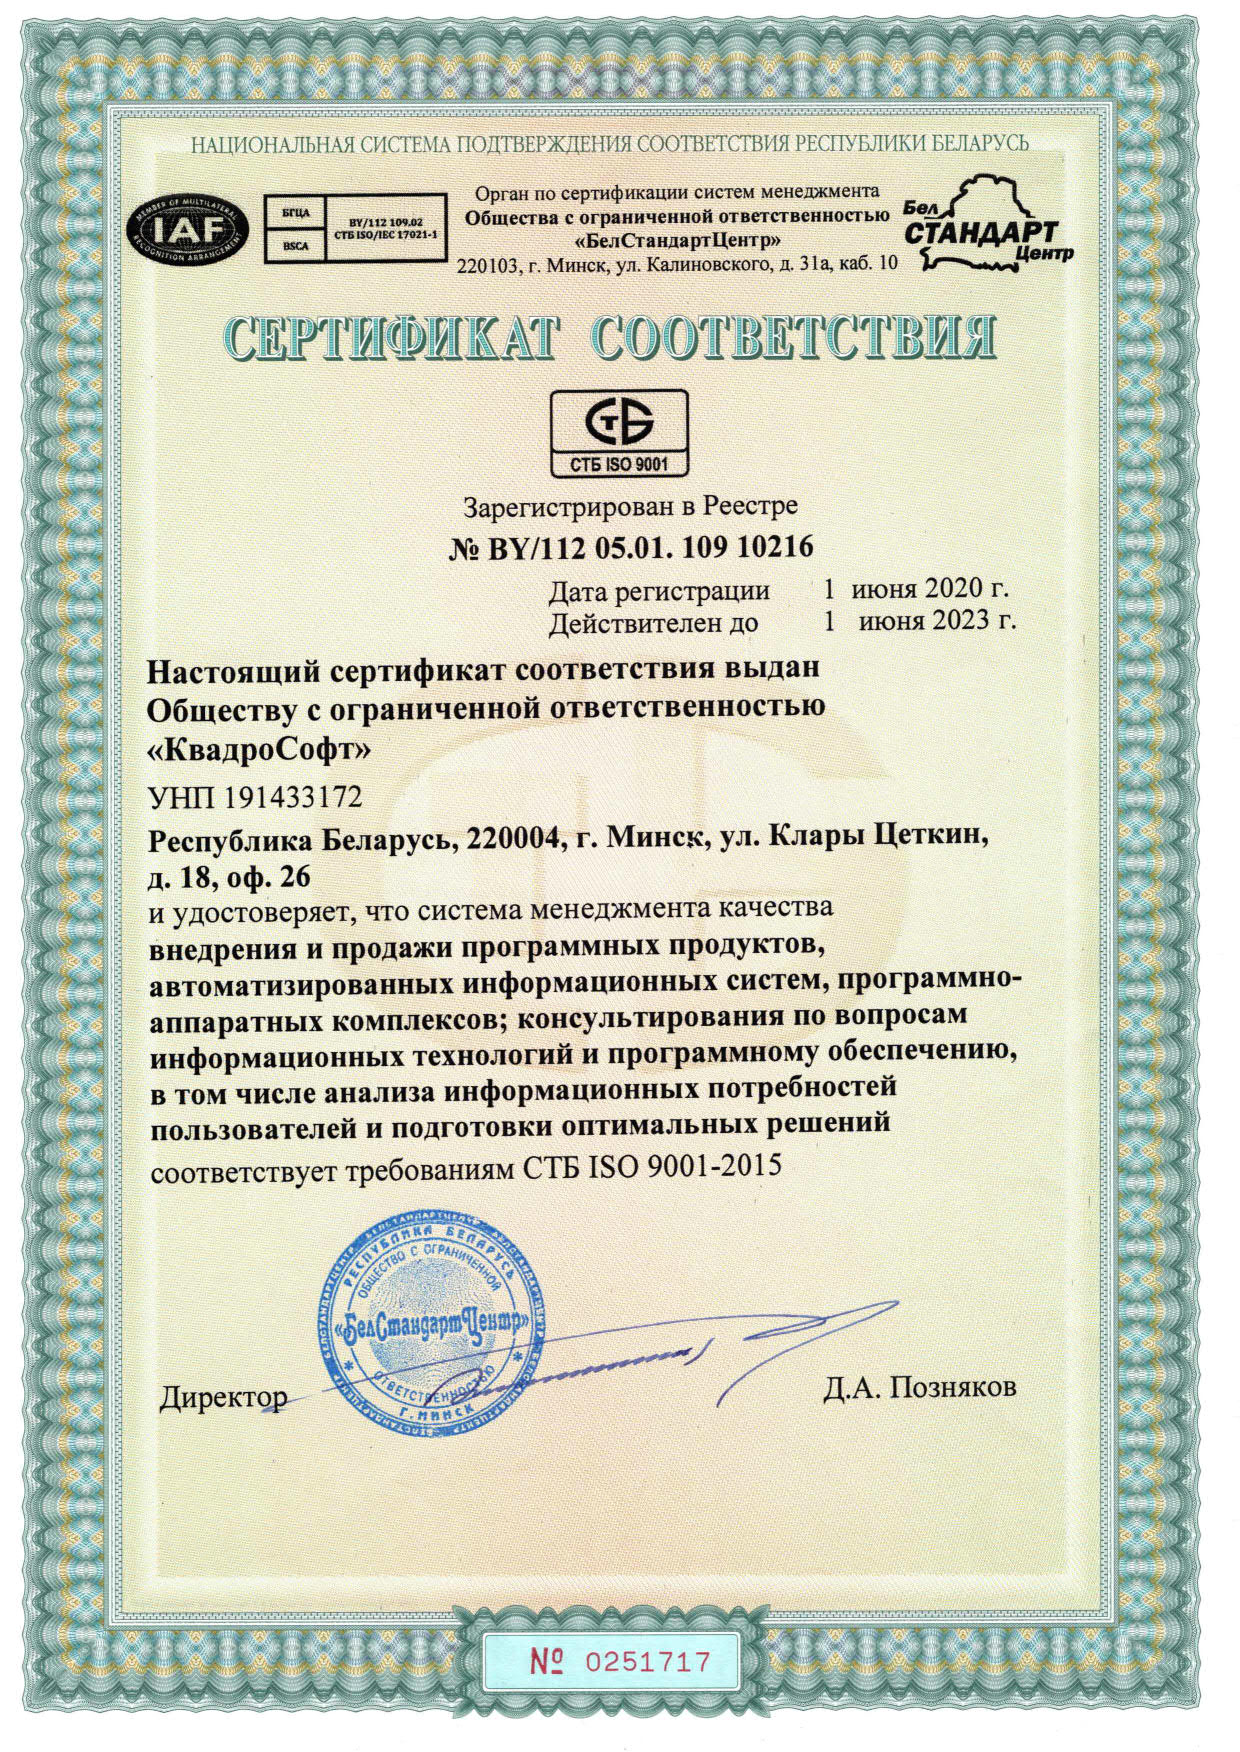 сертификат исо 9001 фото образец